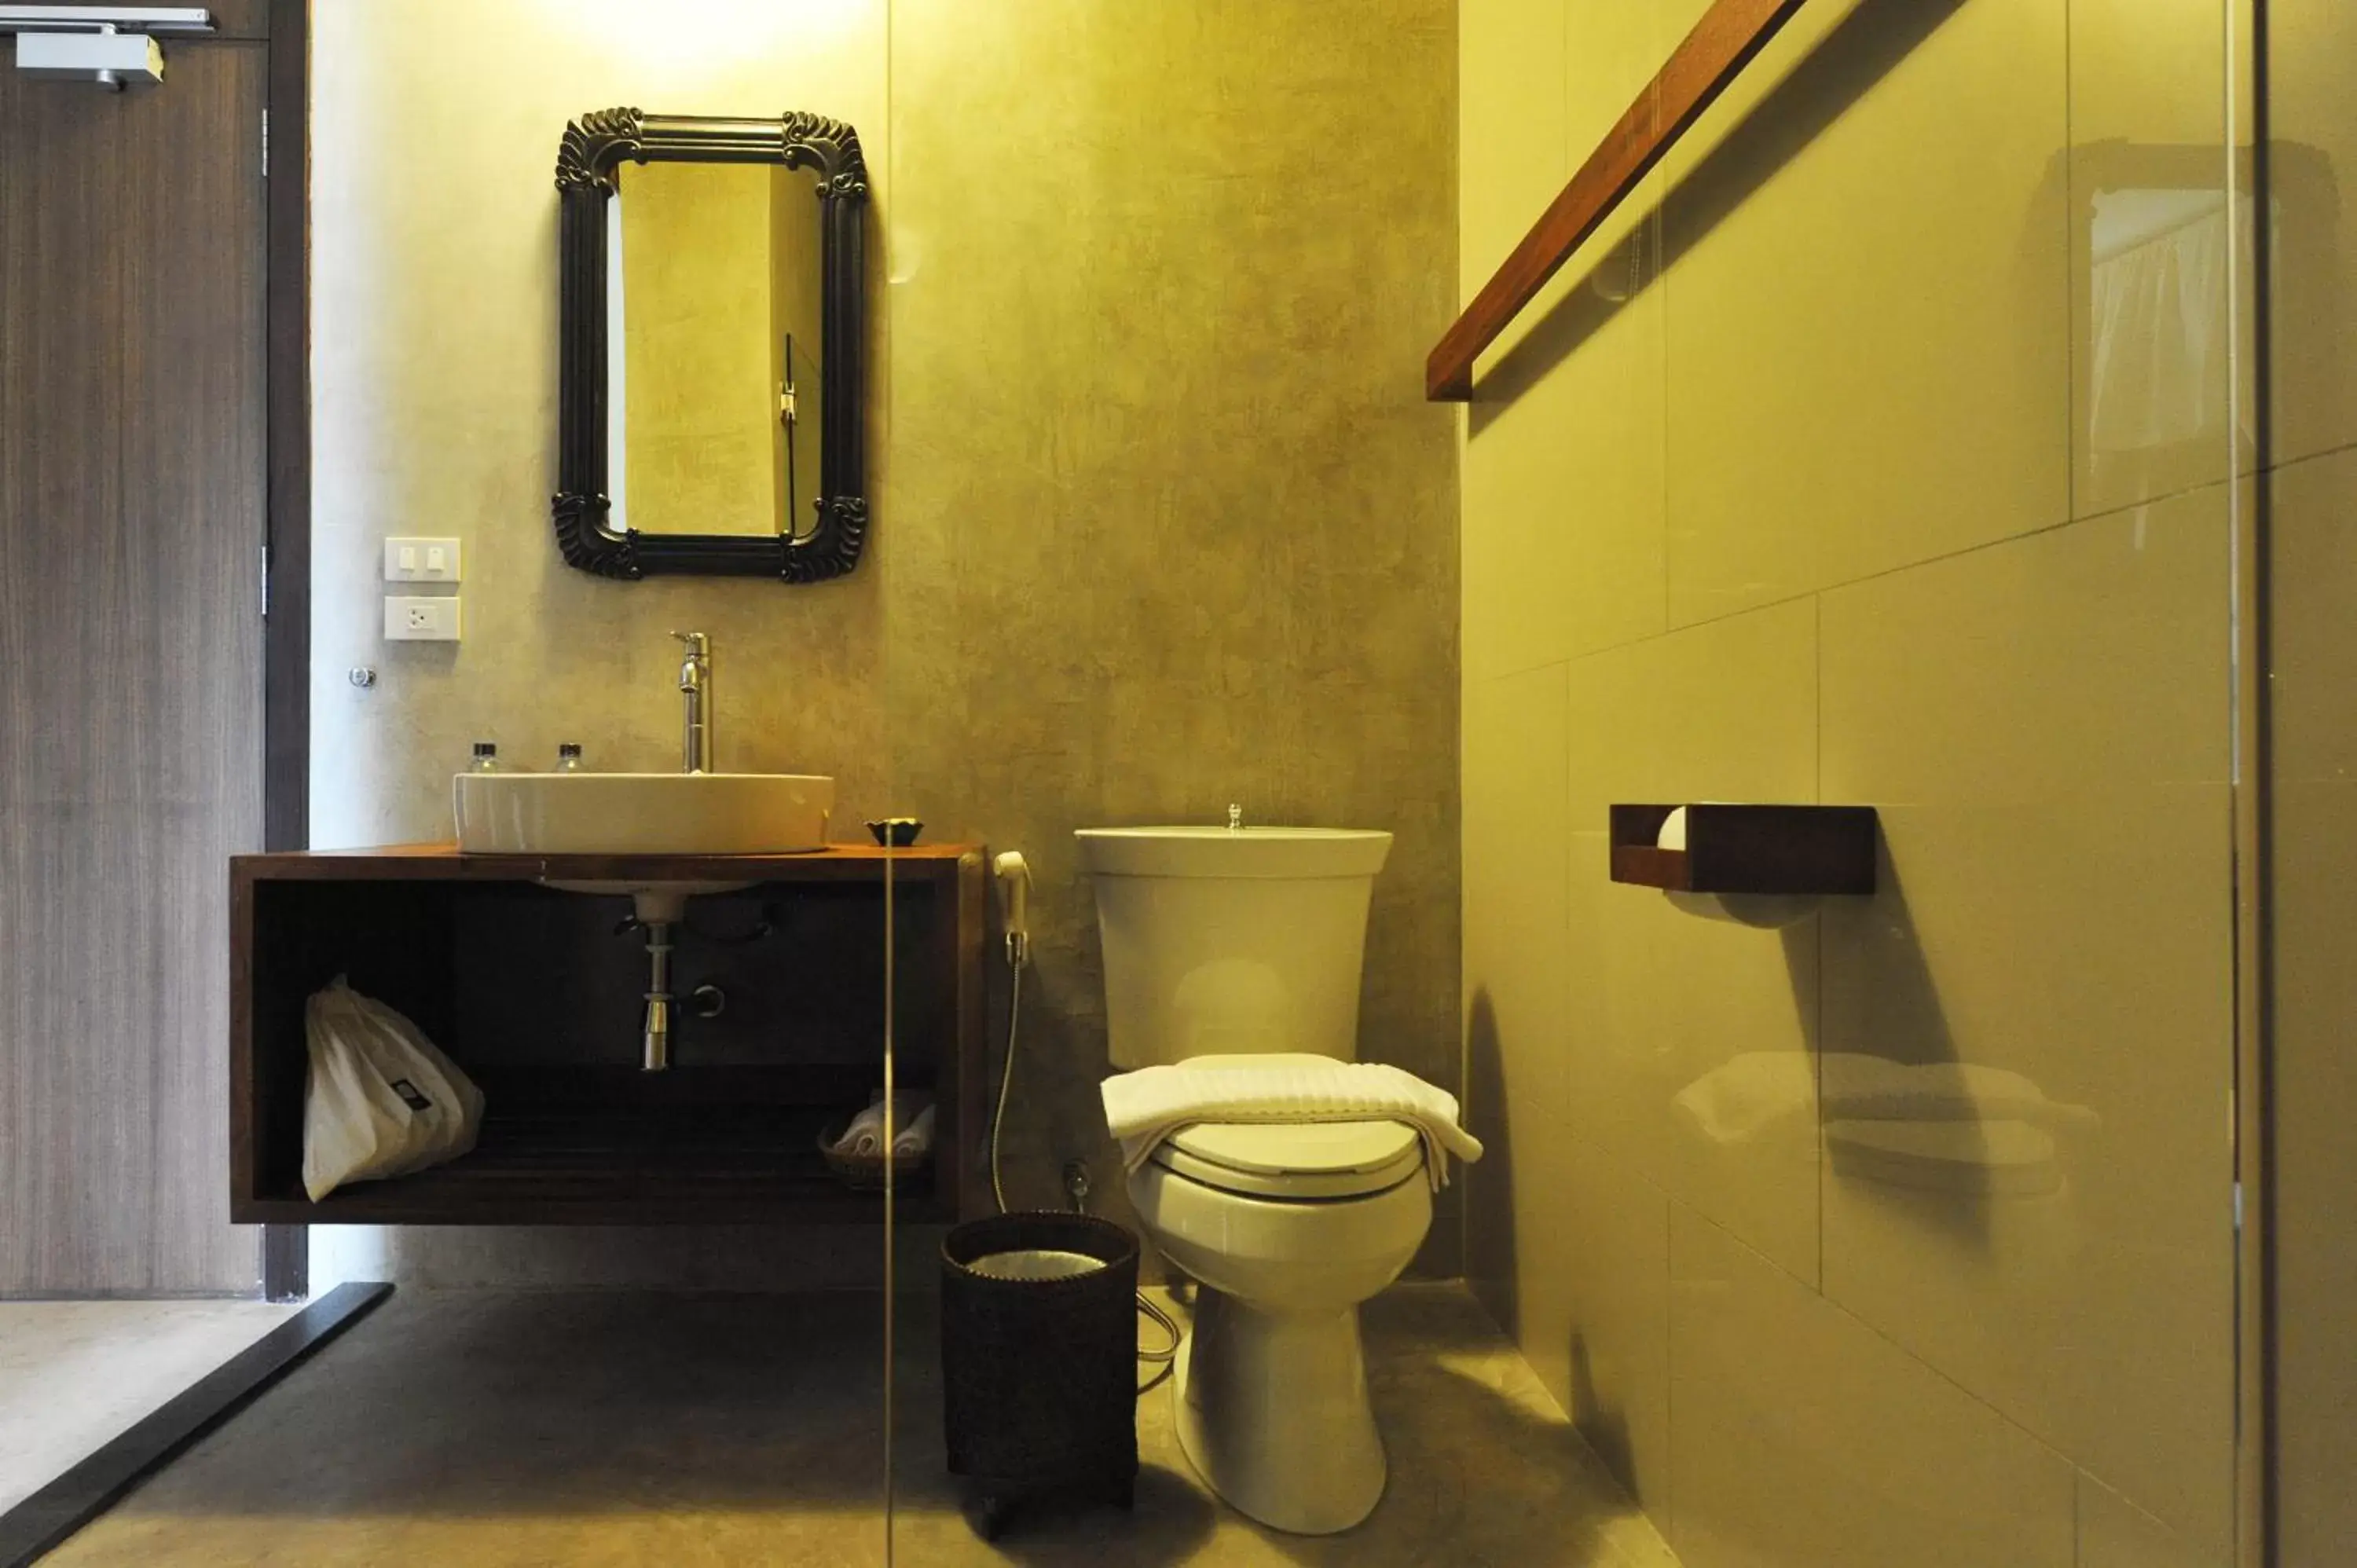 Photo of the whole room, Bathroom in VILLA BANGKOK formerly VILLA PHRA SUMEN